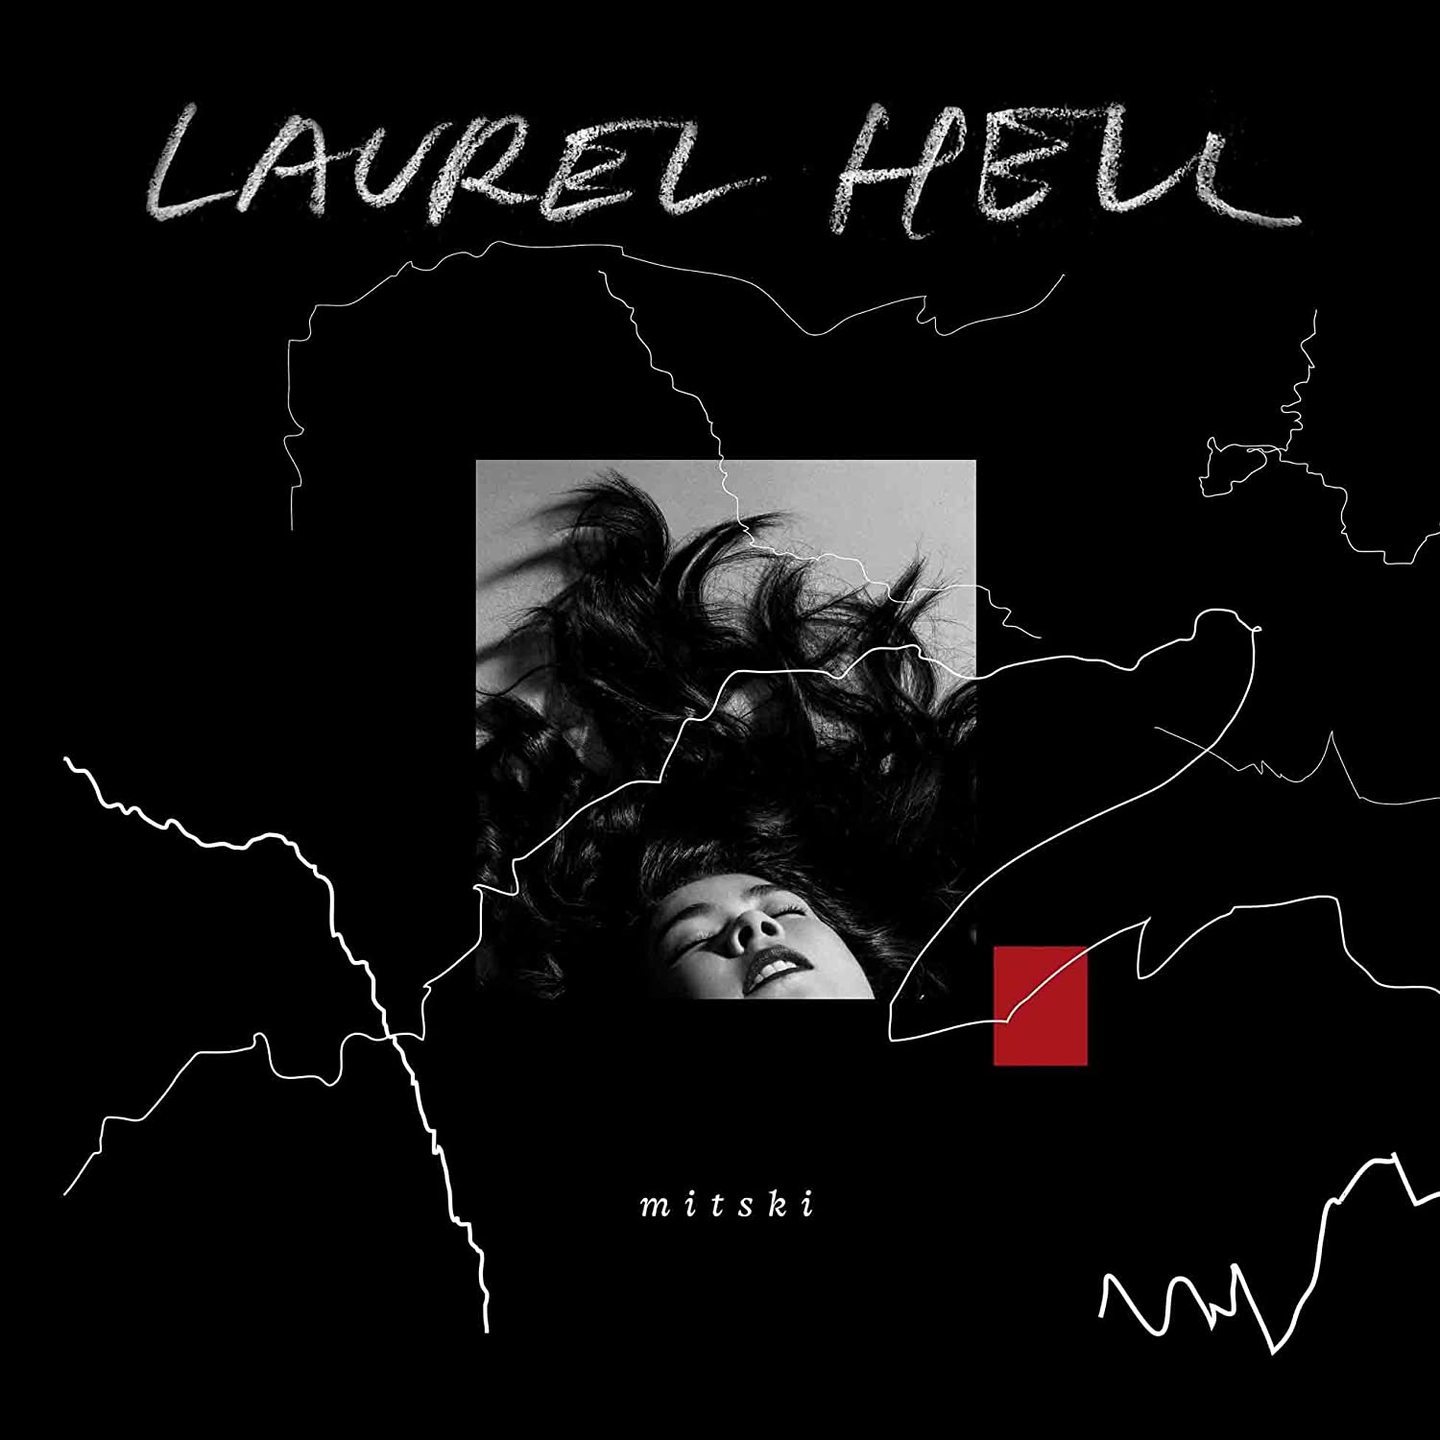 MITSKI - Laurel Hell LP (Black vinyl)